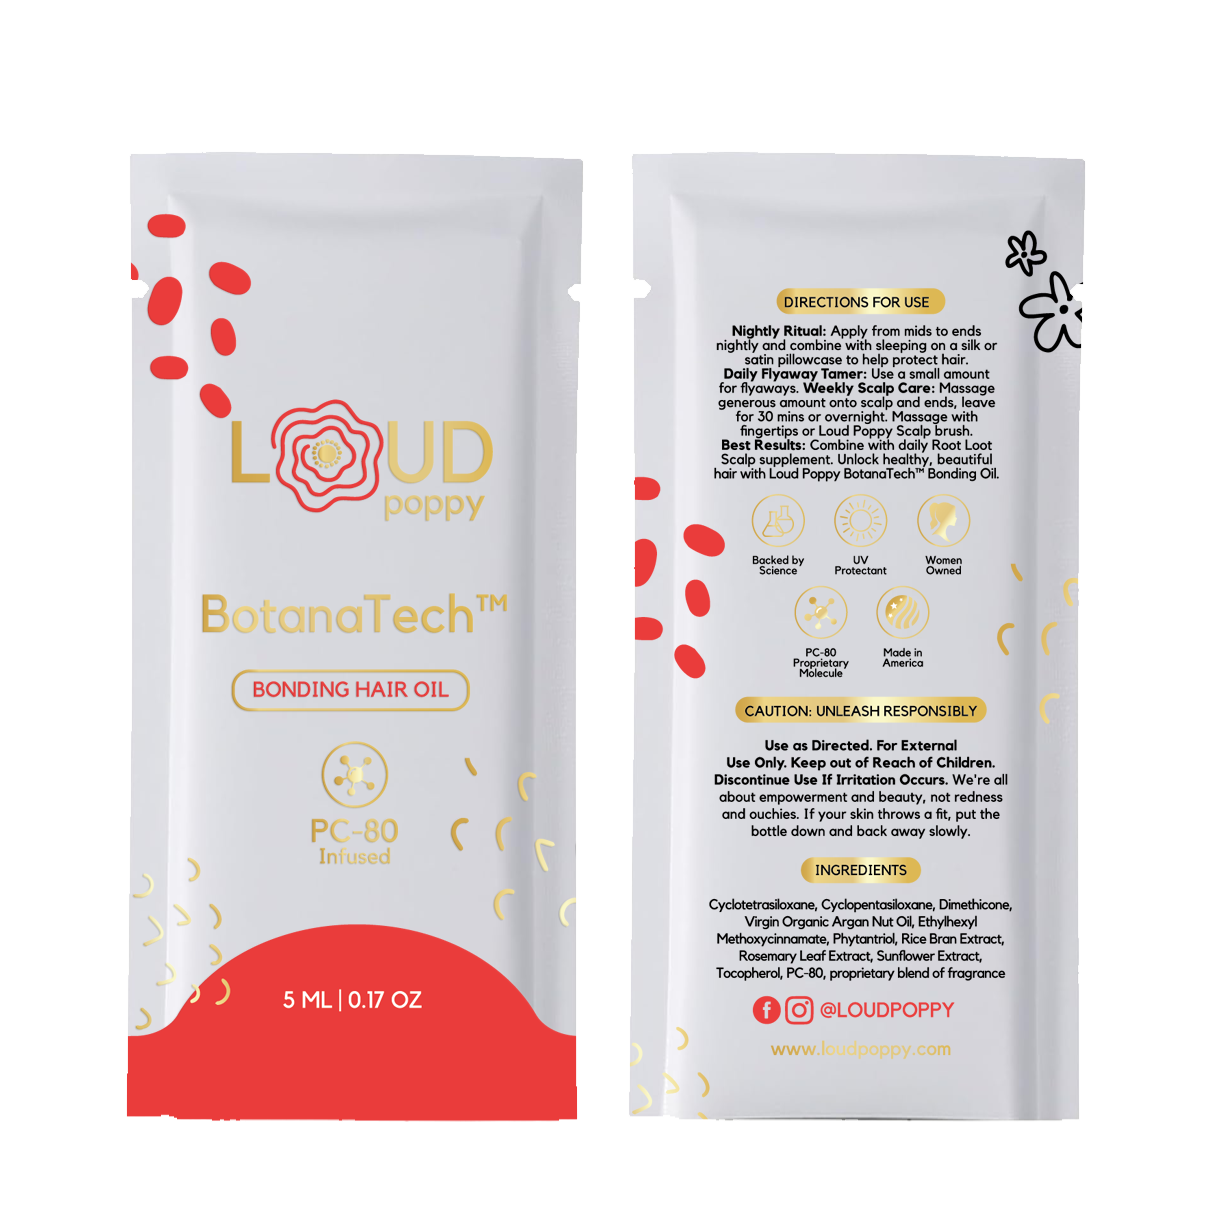 BotanaTech Bonding Hair Oil - 5ml Sample: Transform Your Hair with Nature & Science